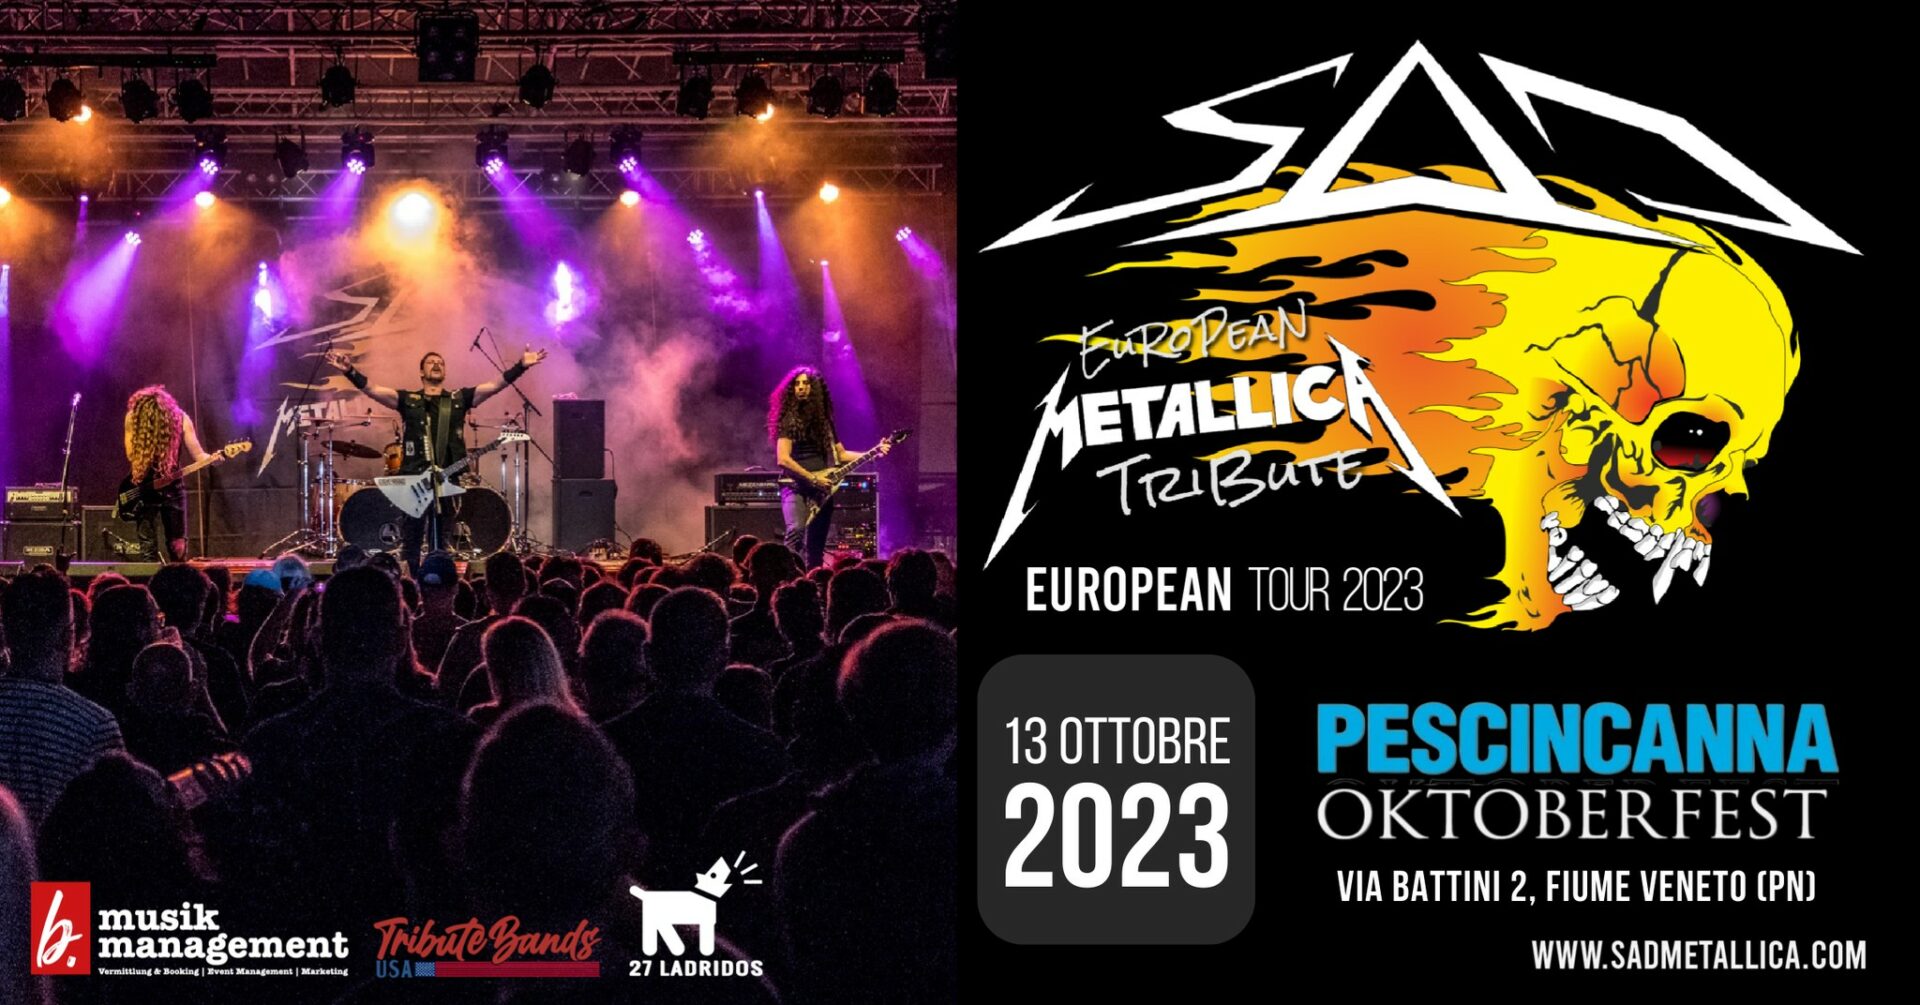 SaD European Metallica Tribute Live @ Pescincanna Oktoberfest